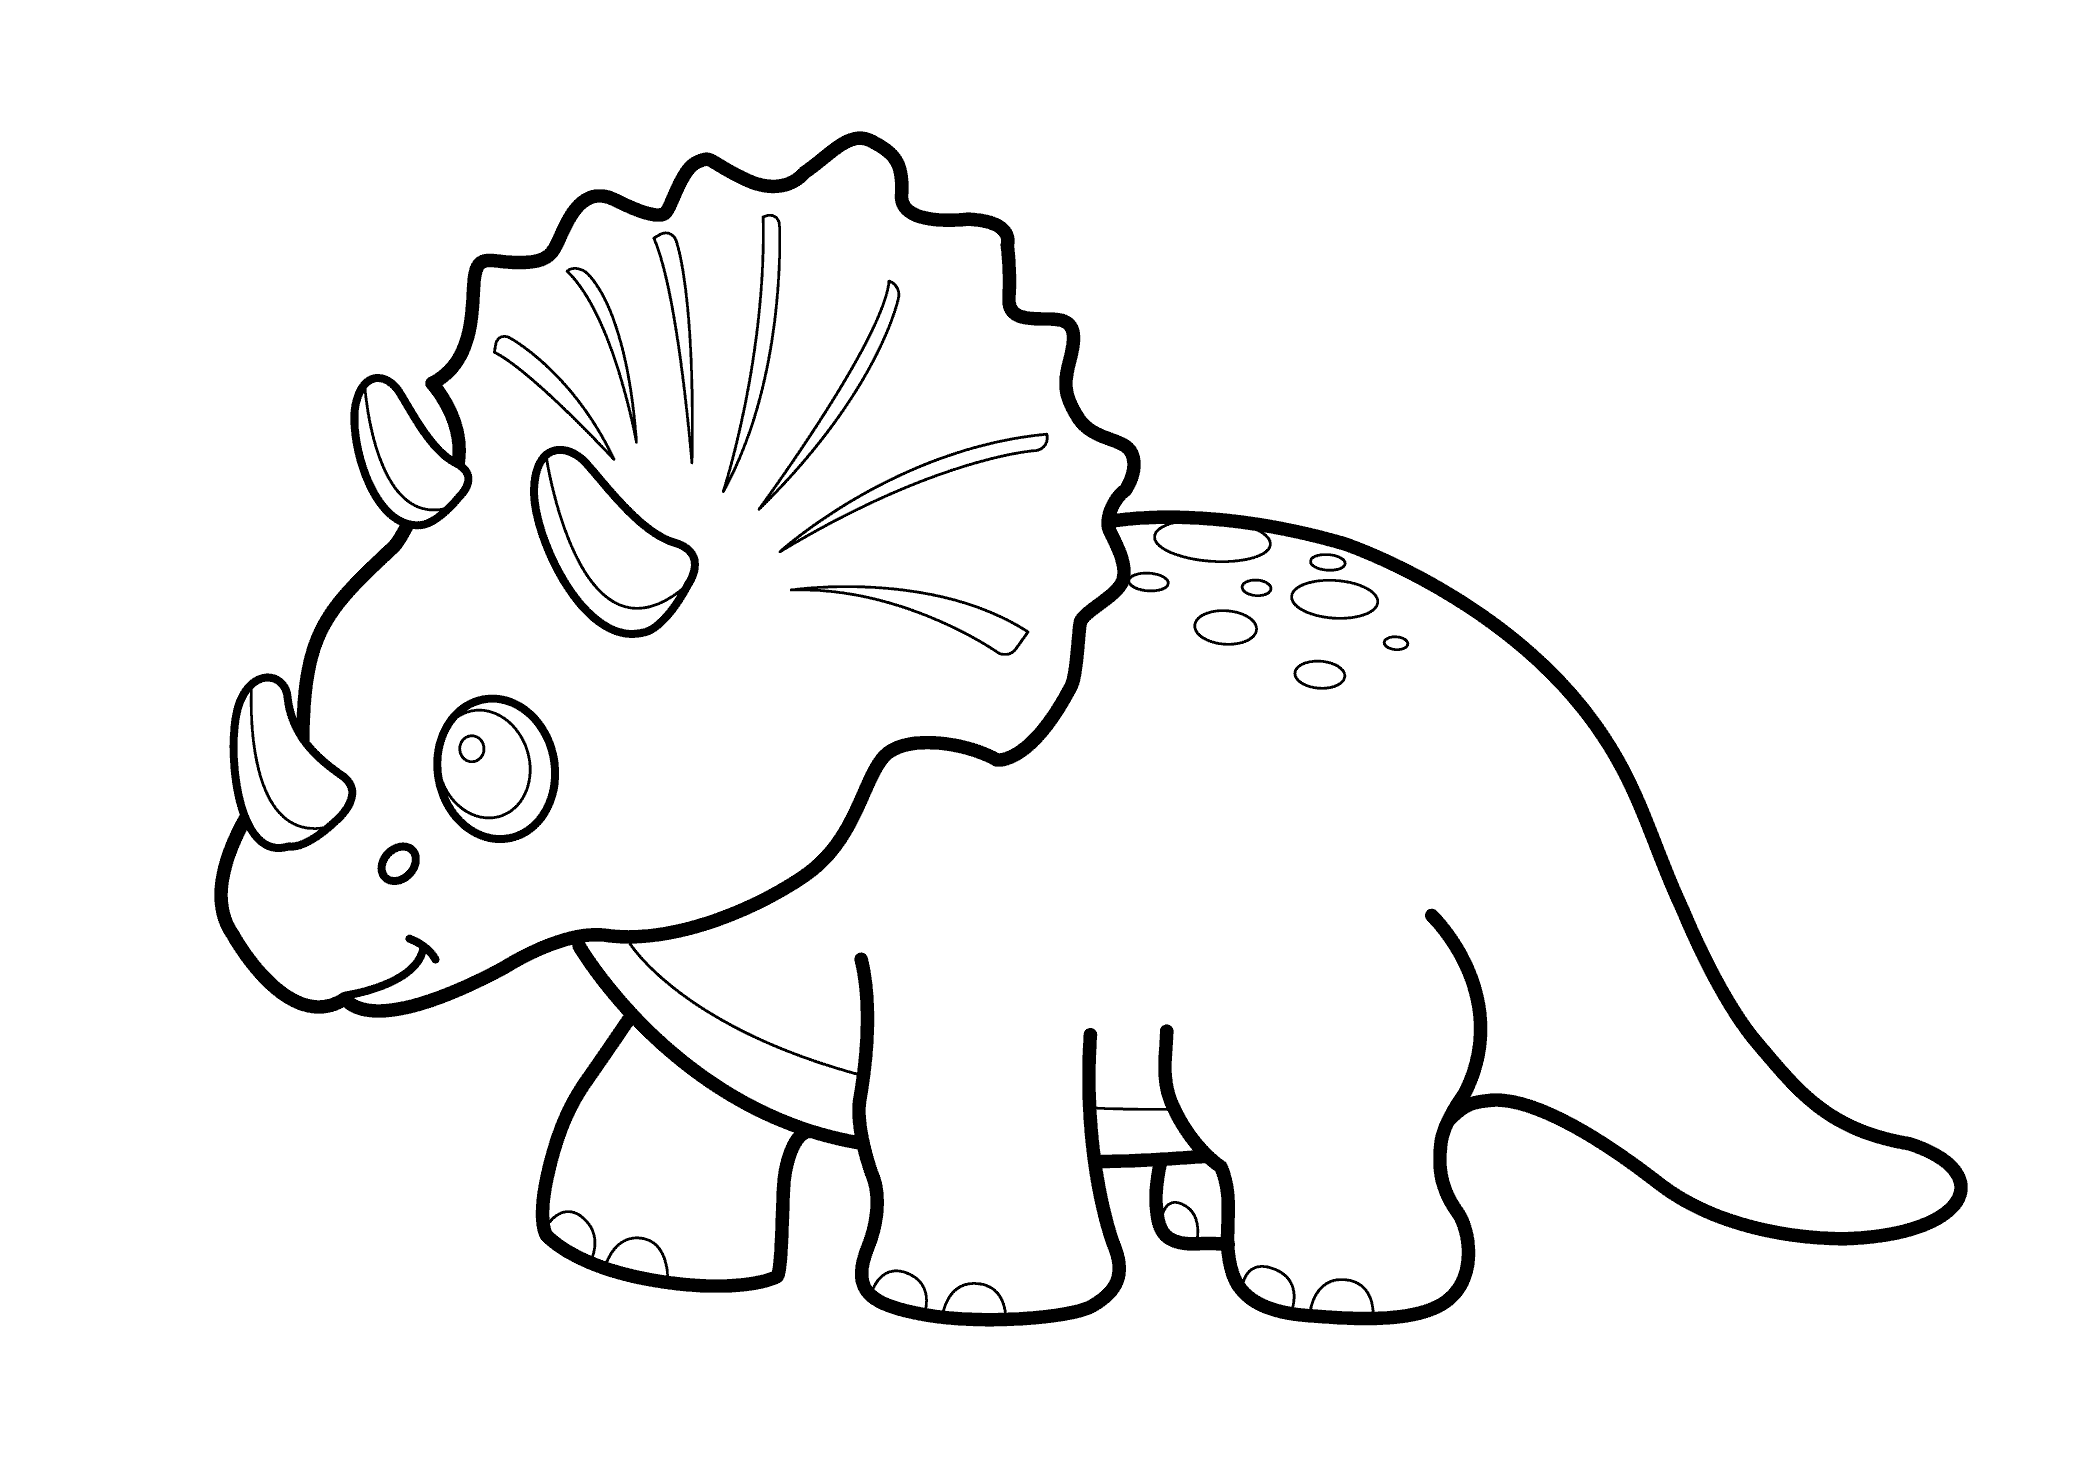 dinosaur cartoon drawing at getdrawings | free download